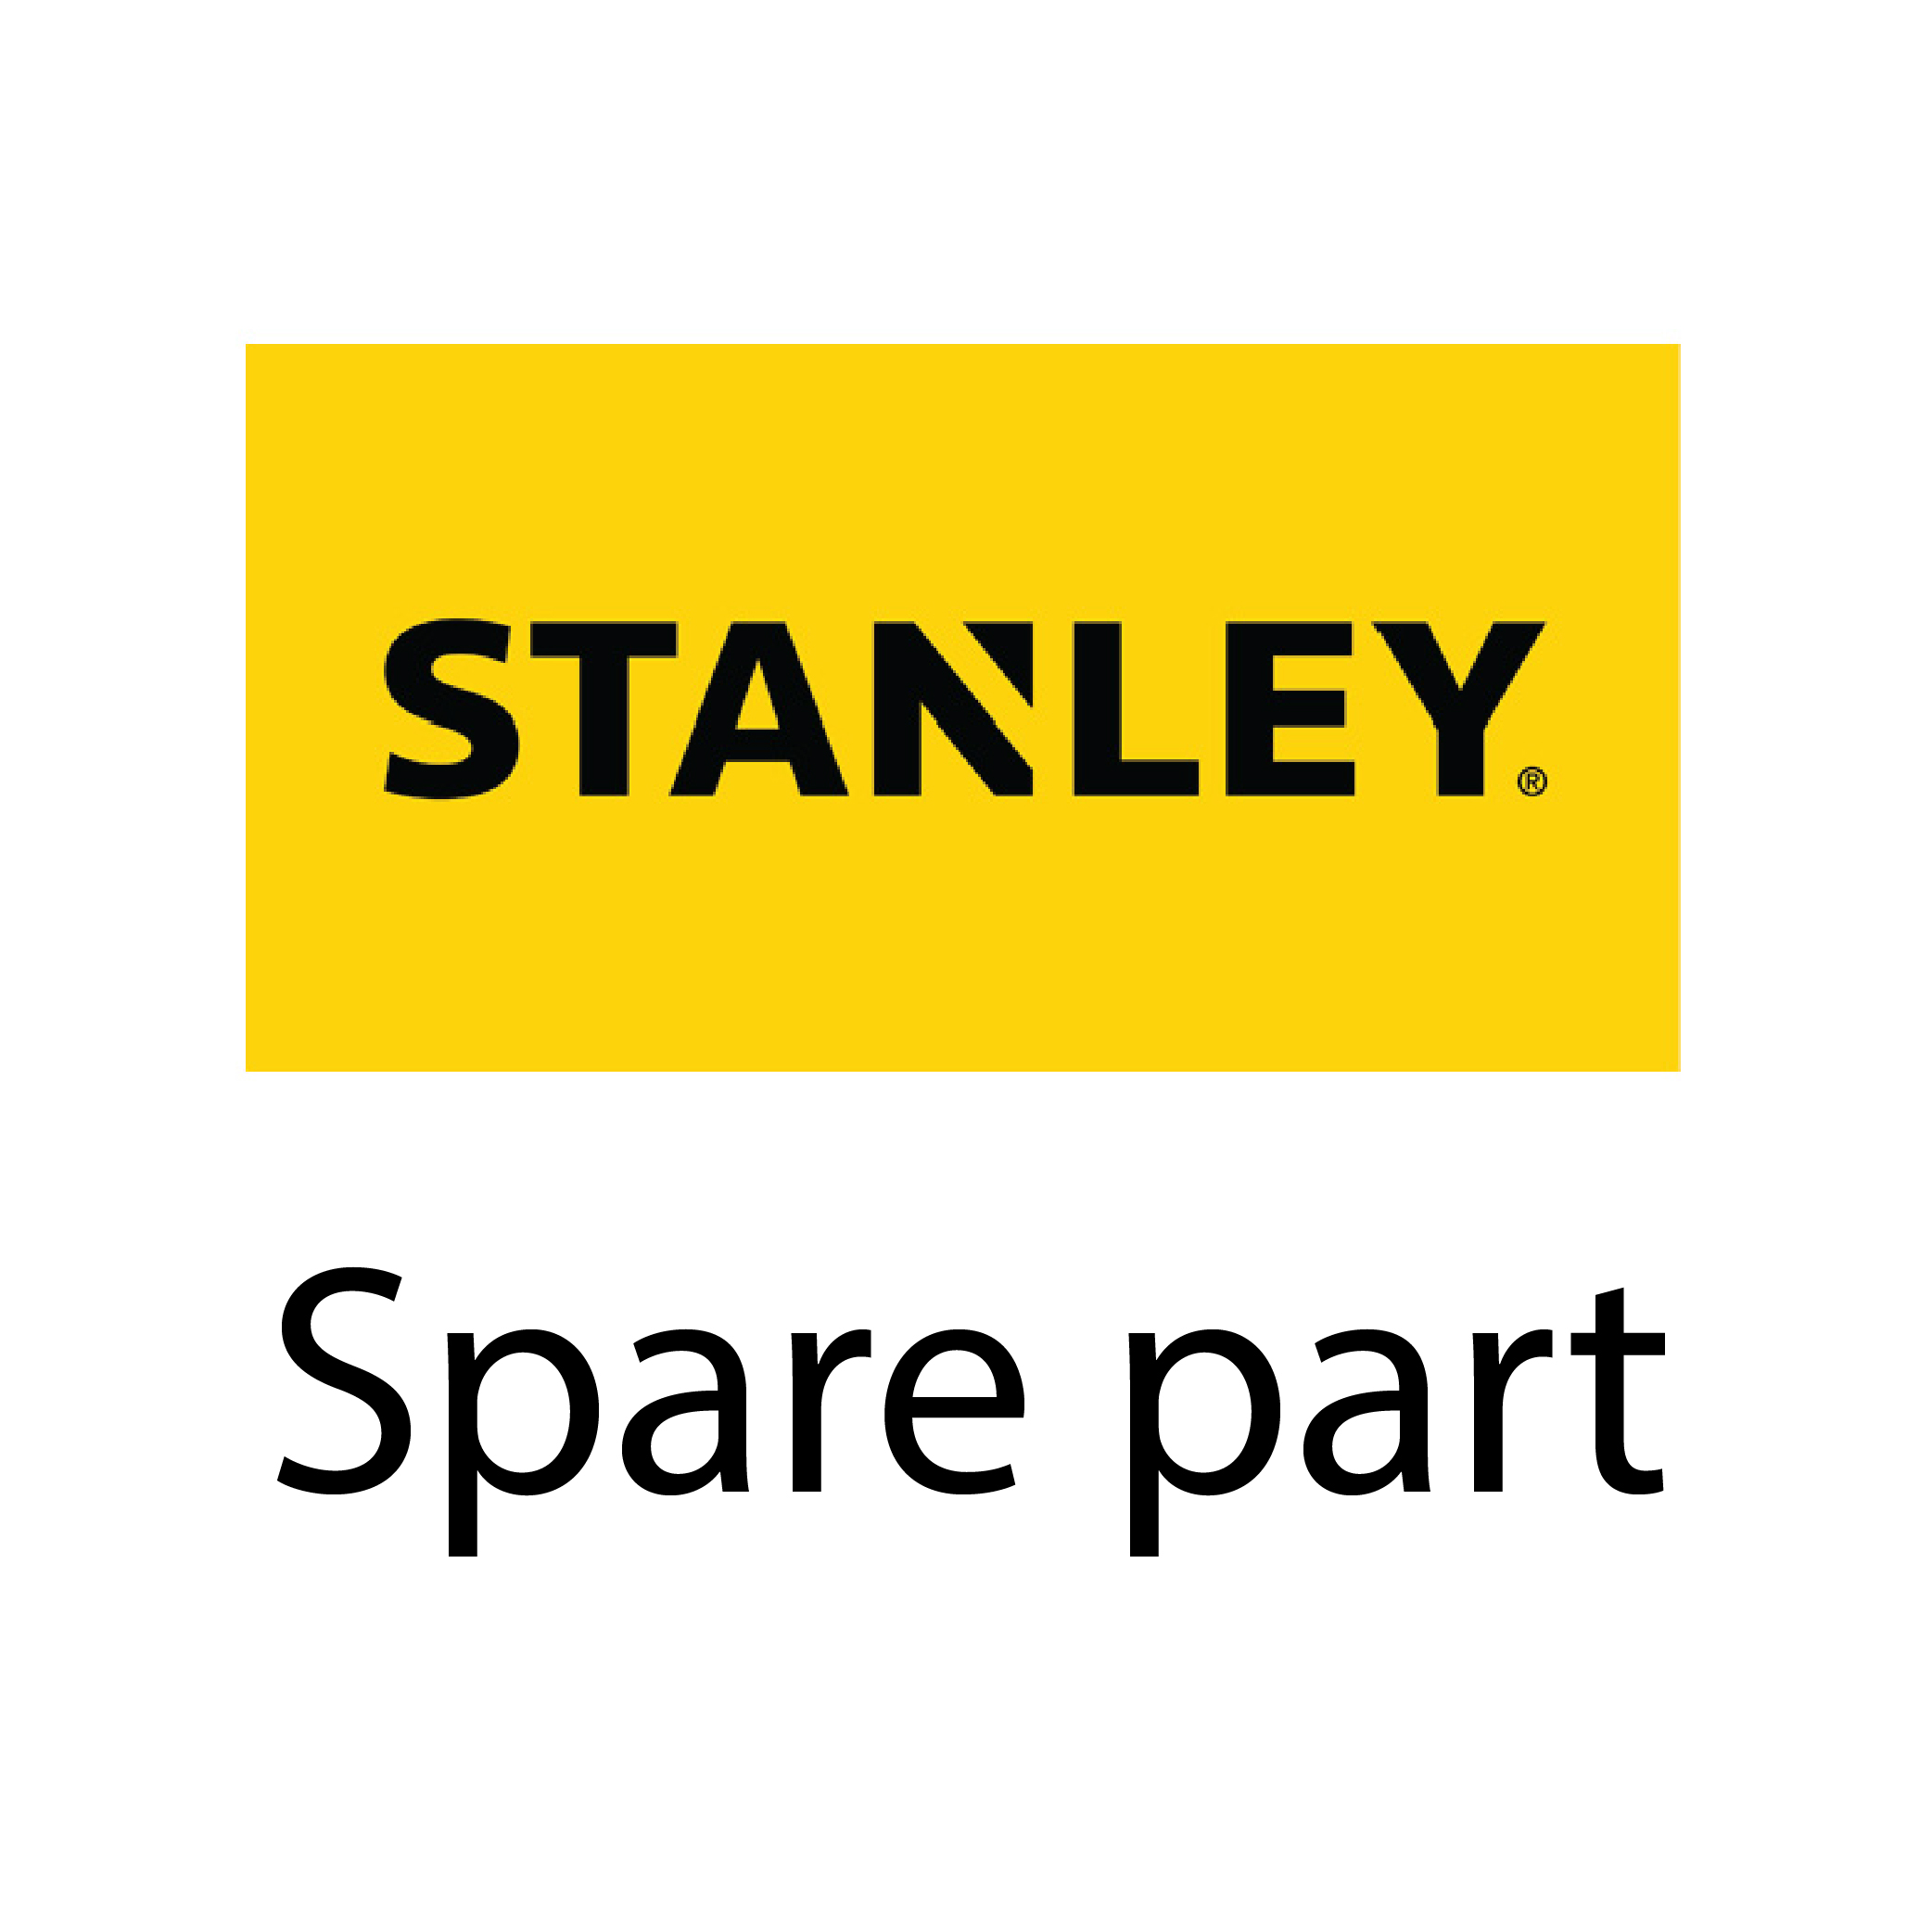 SKI - สกี จำหน่ายสินค้าหลากหลาย และคุณภาพดี | STANLEY #90532040 ทุ่น STEL145